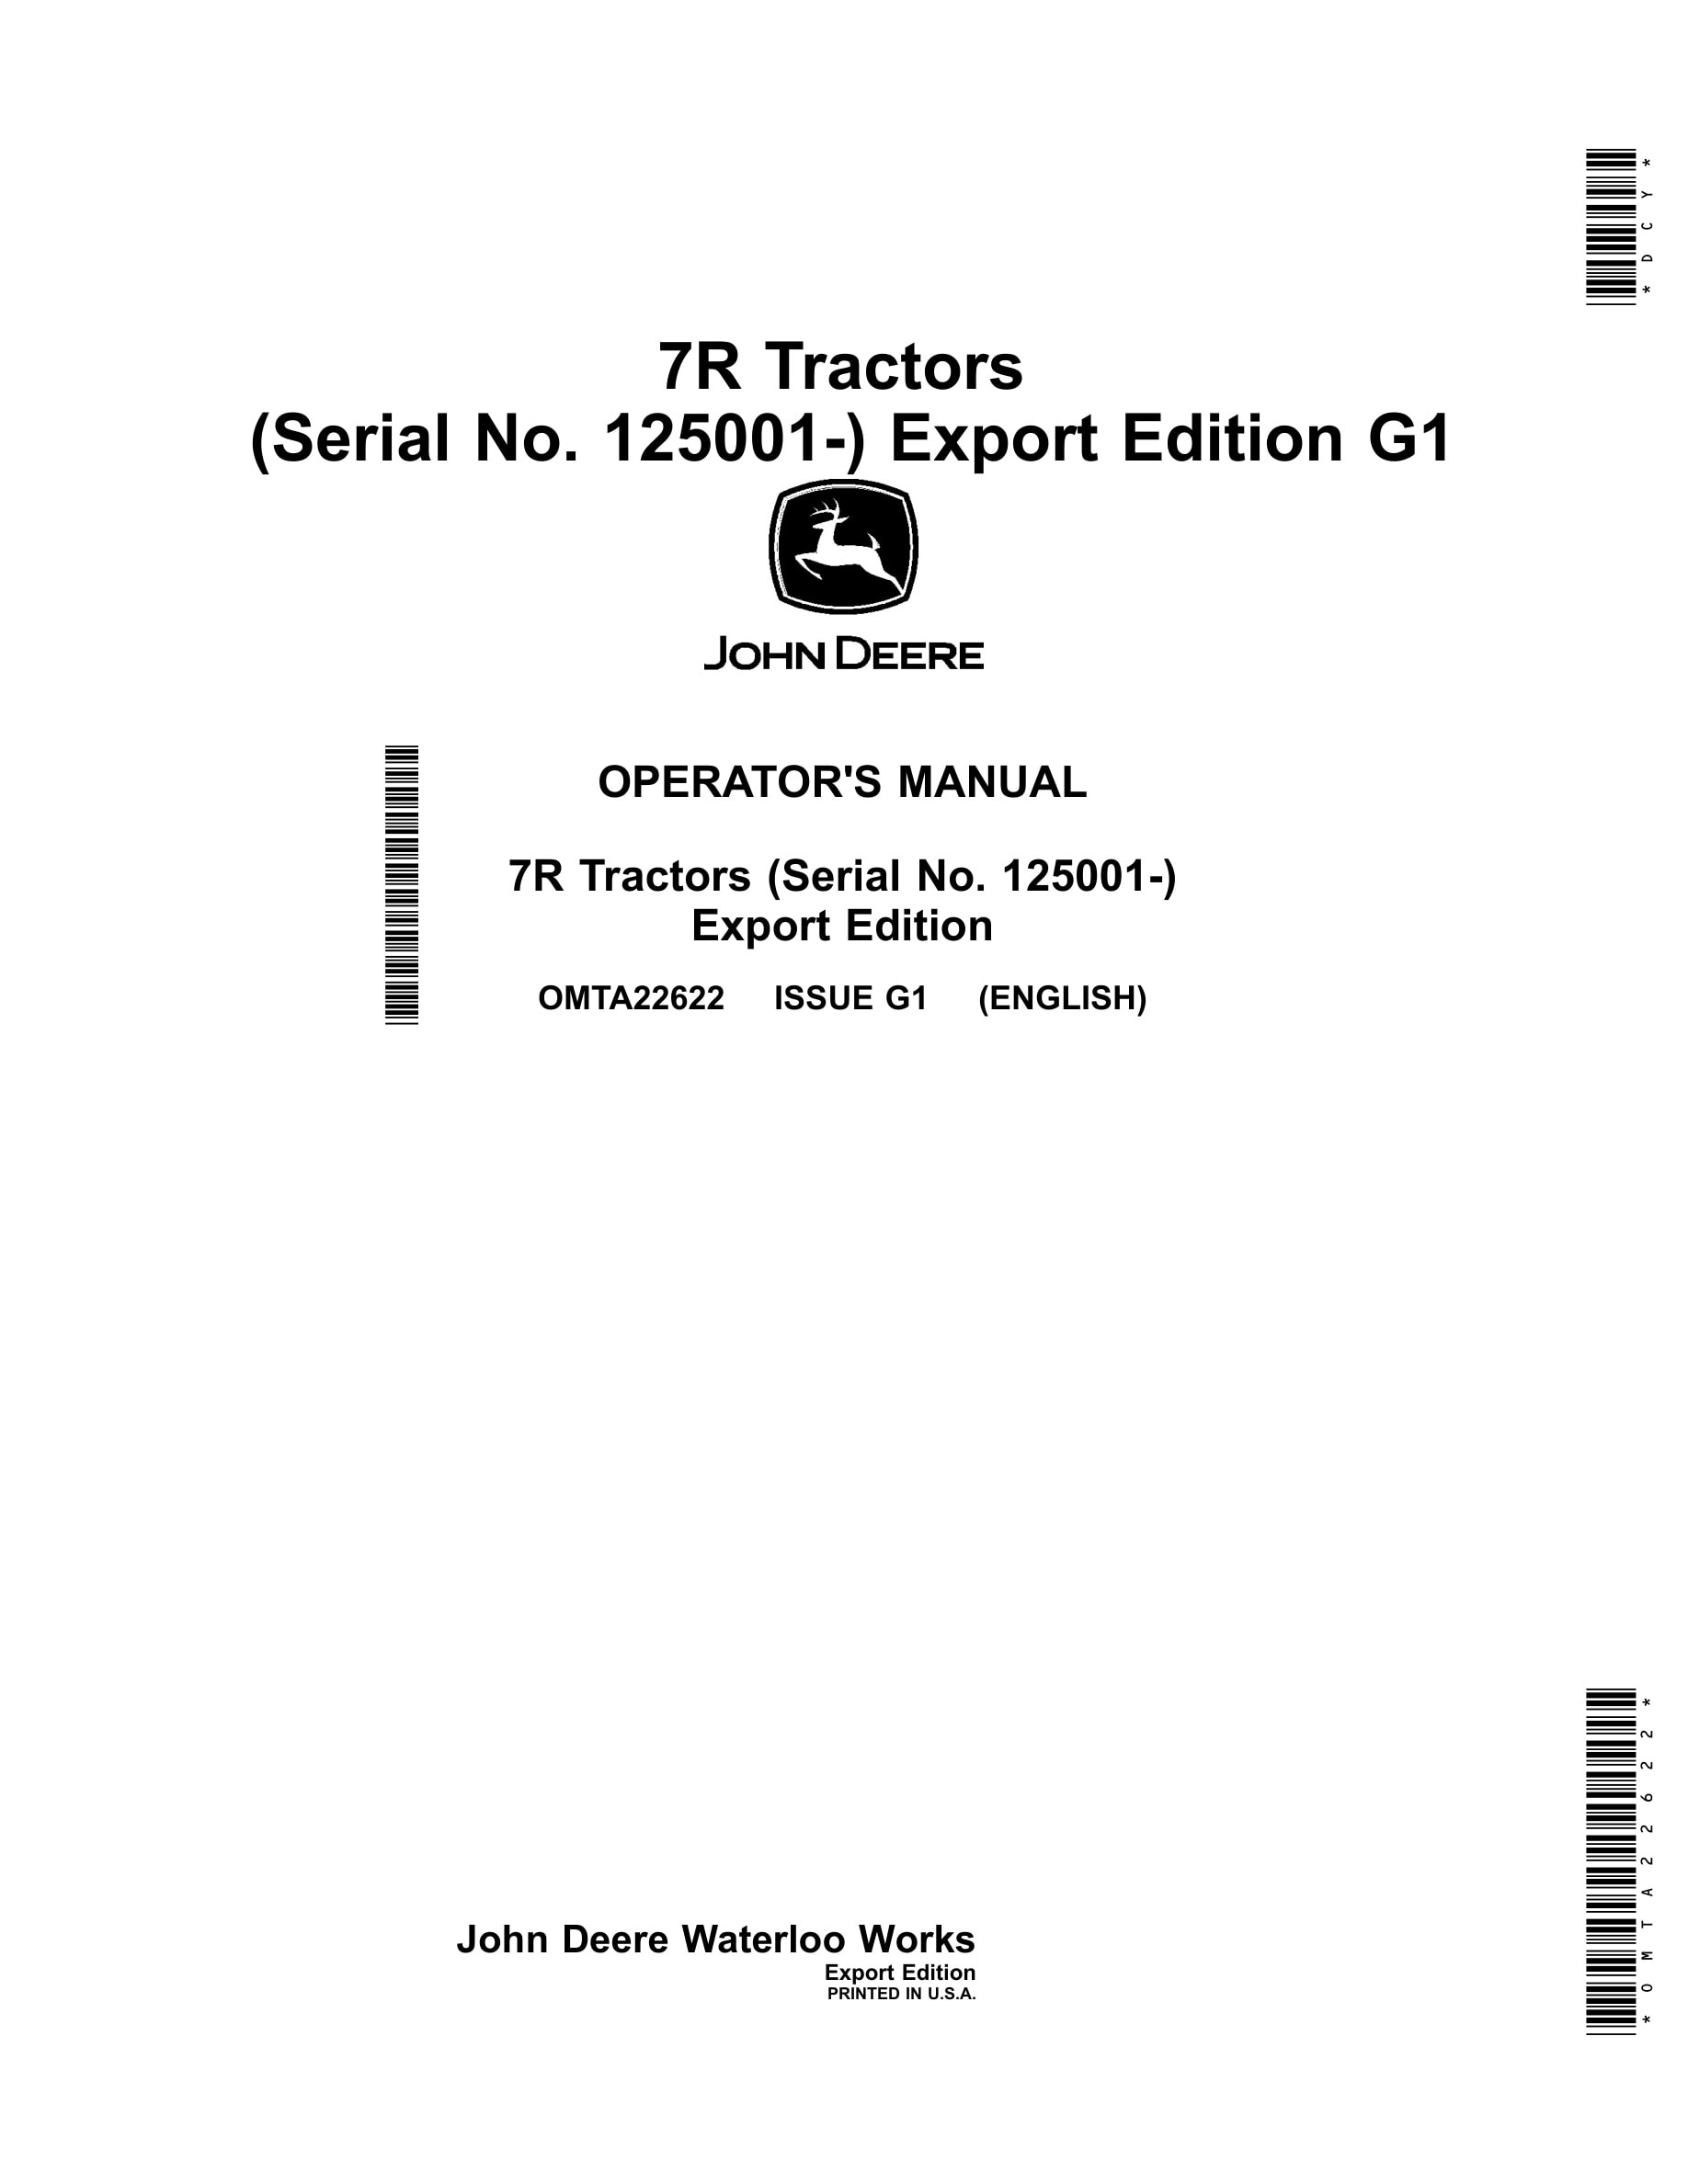 John Deere 7r Tractors Operator Manuals OMTA22622-1